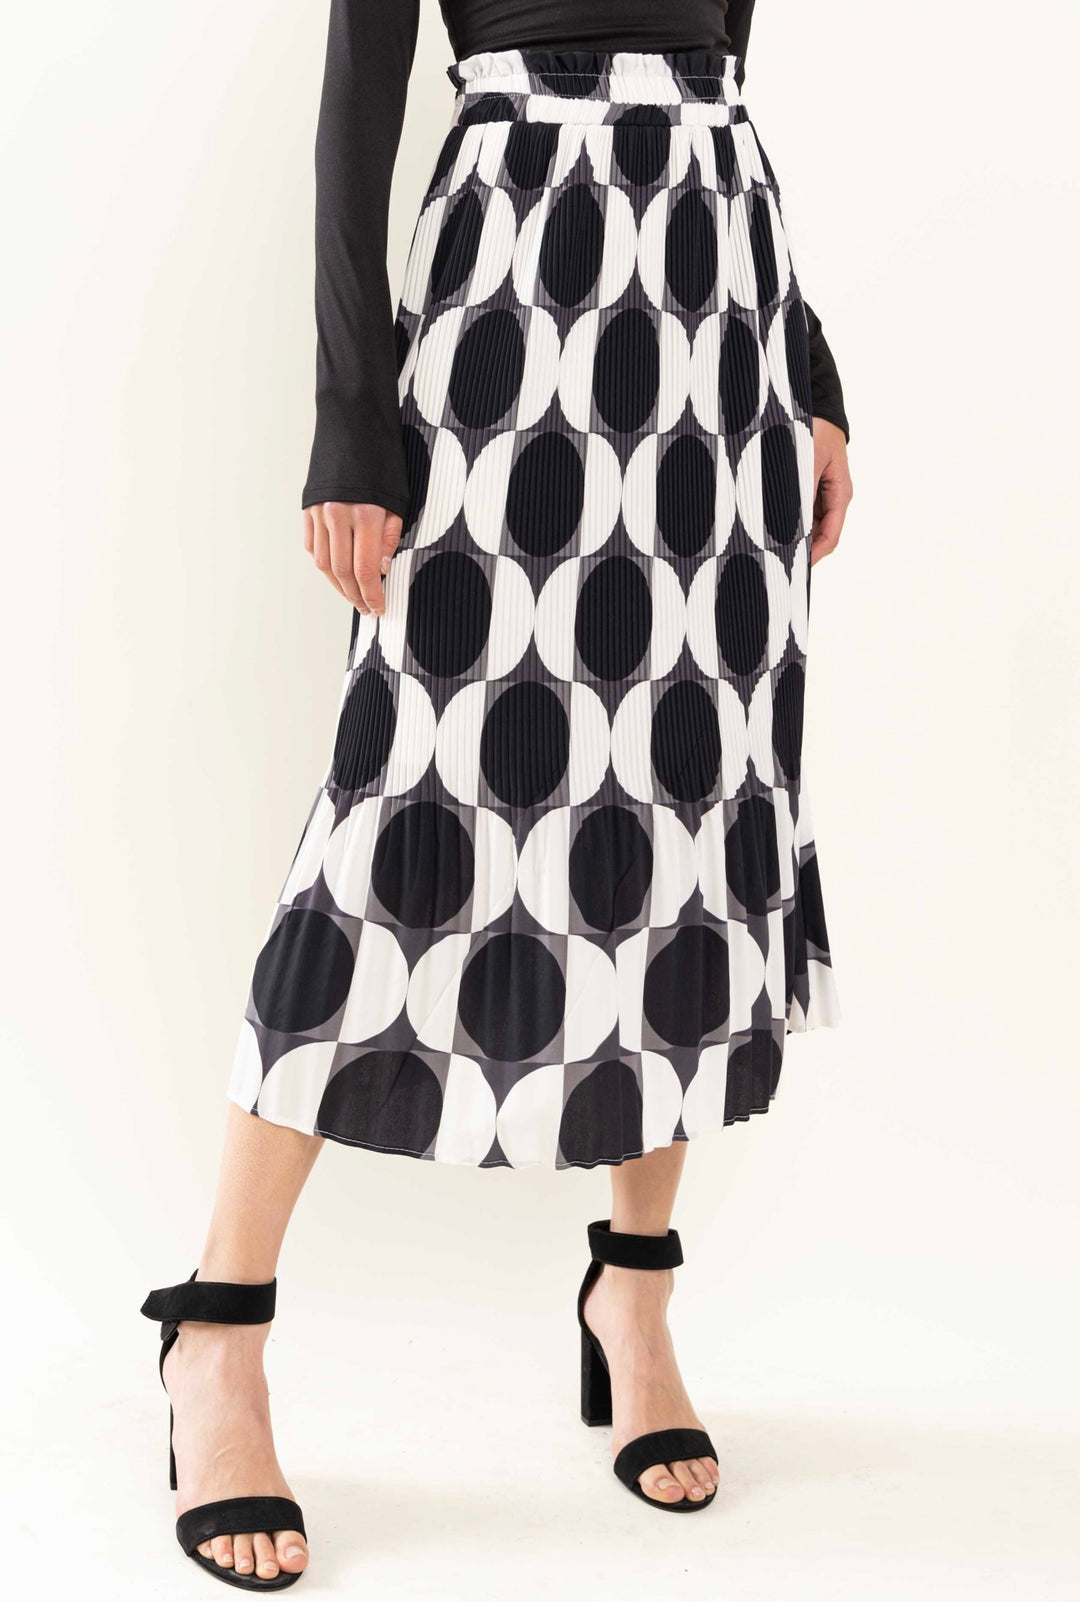 Liza Lou's Black Geometric Pleated Long Midi Skirt